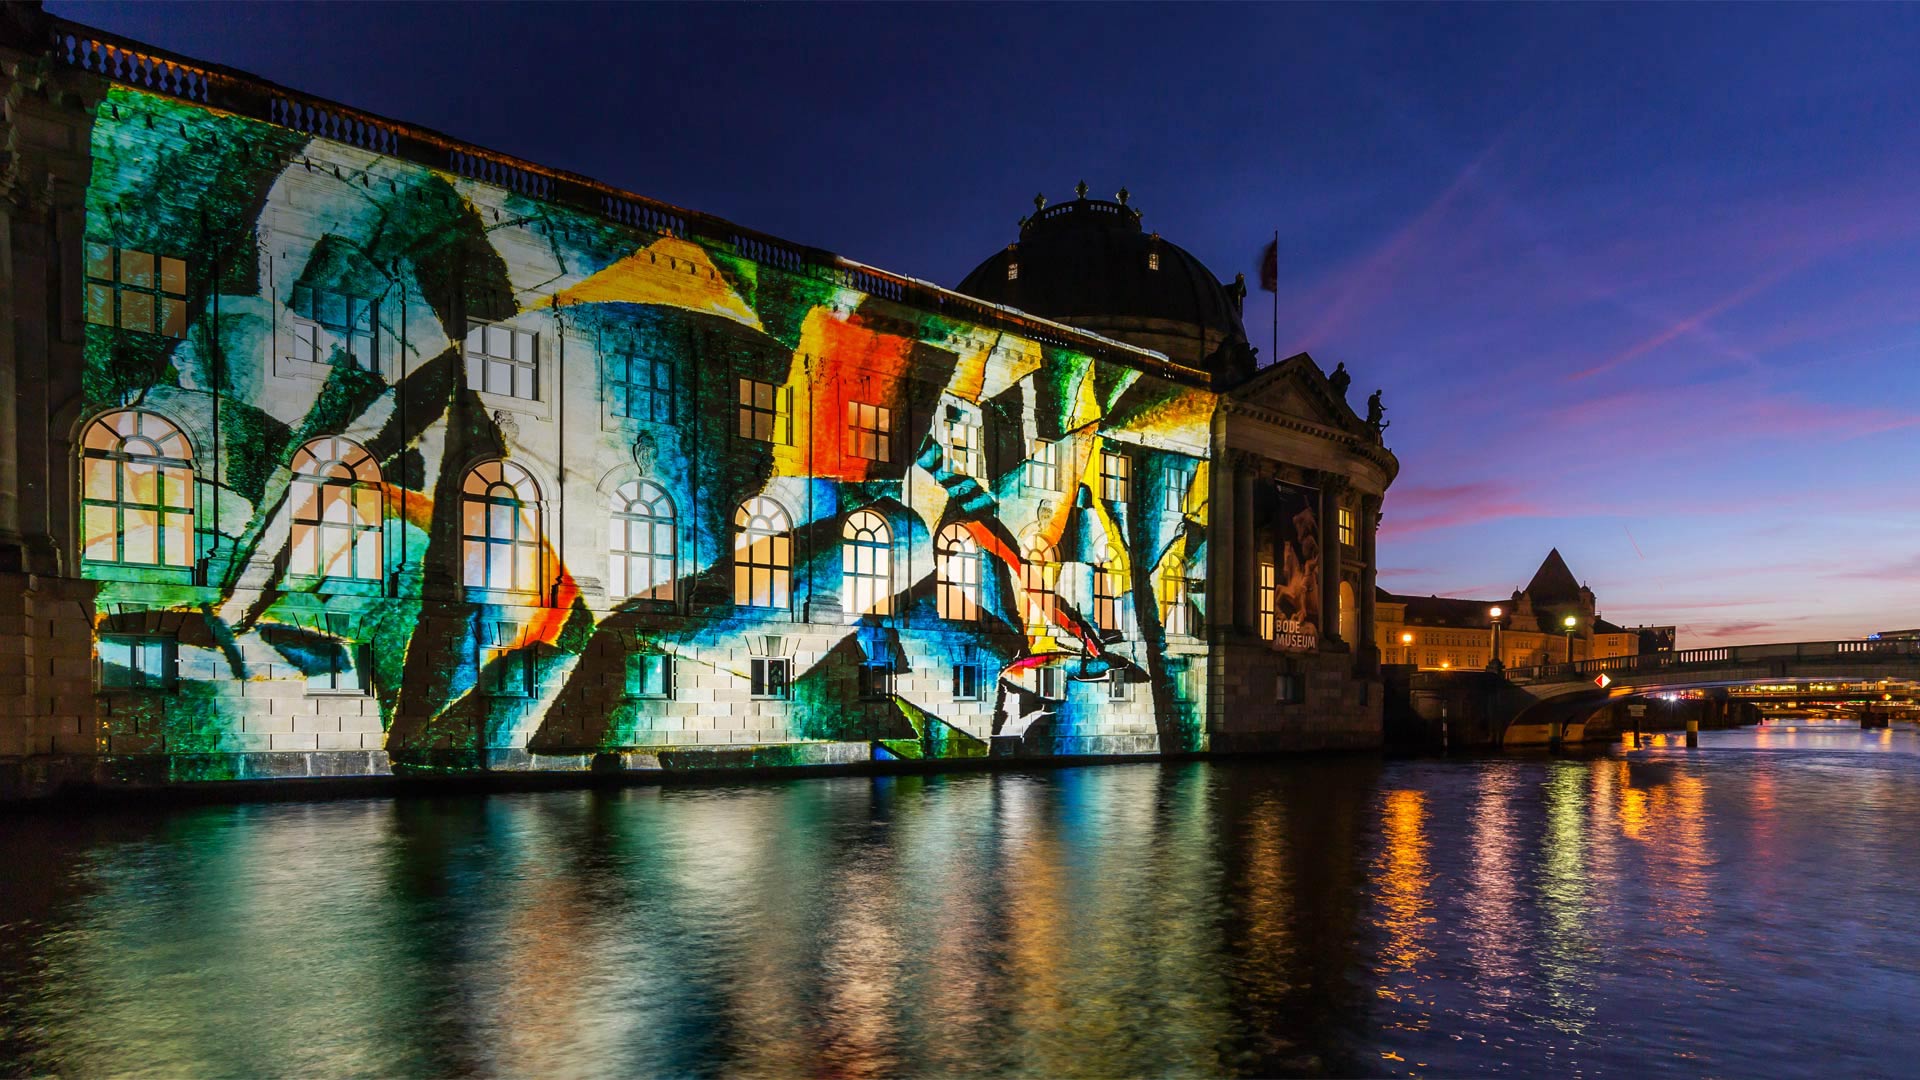 Festival Of Lights - Berlin Wallpapers